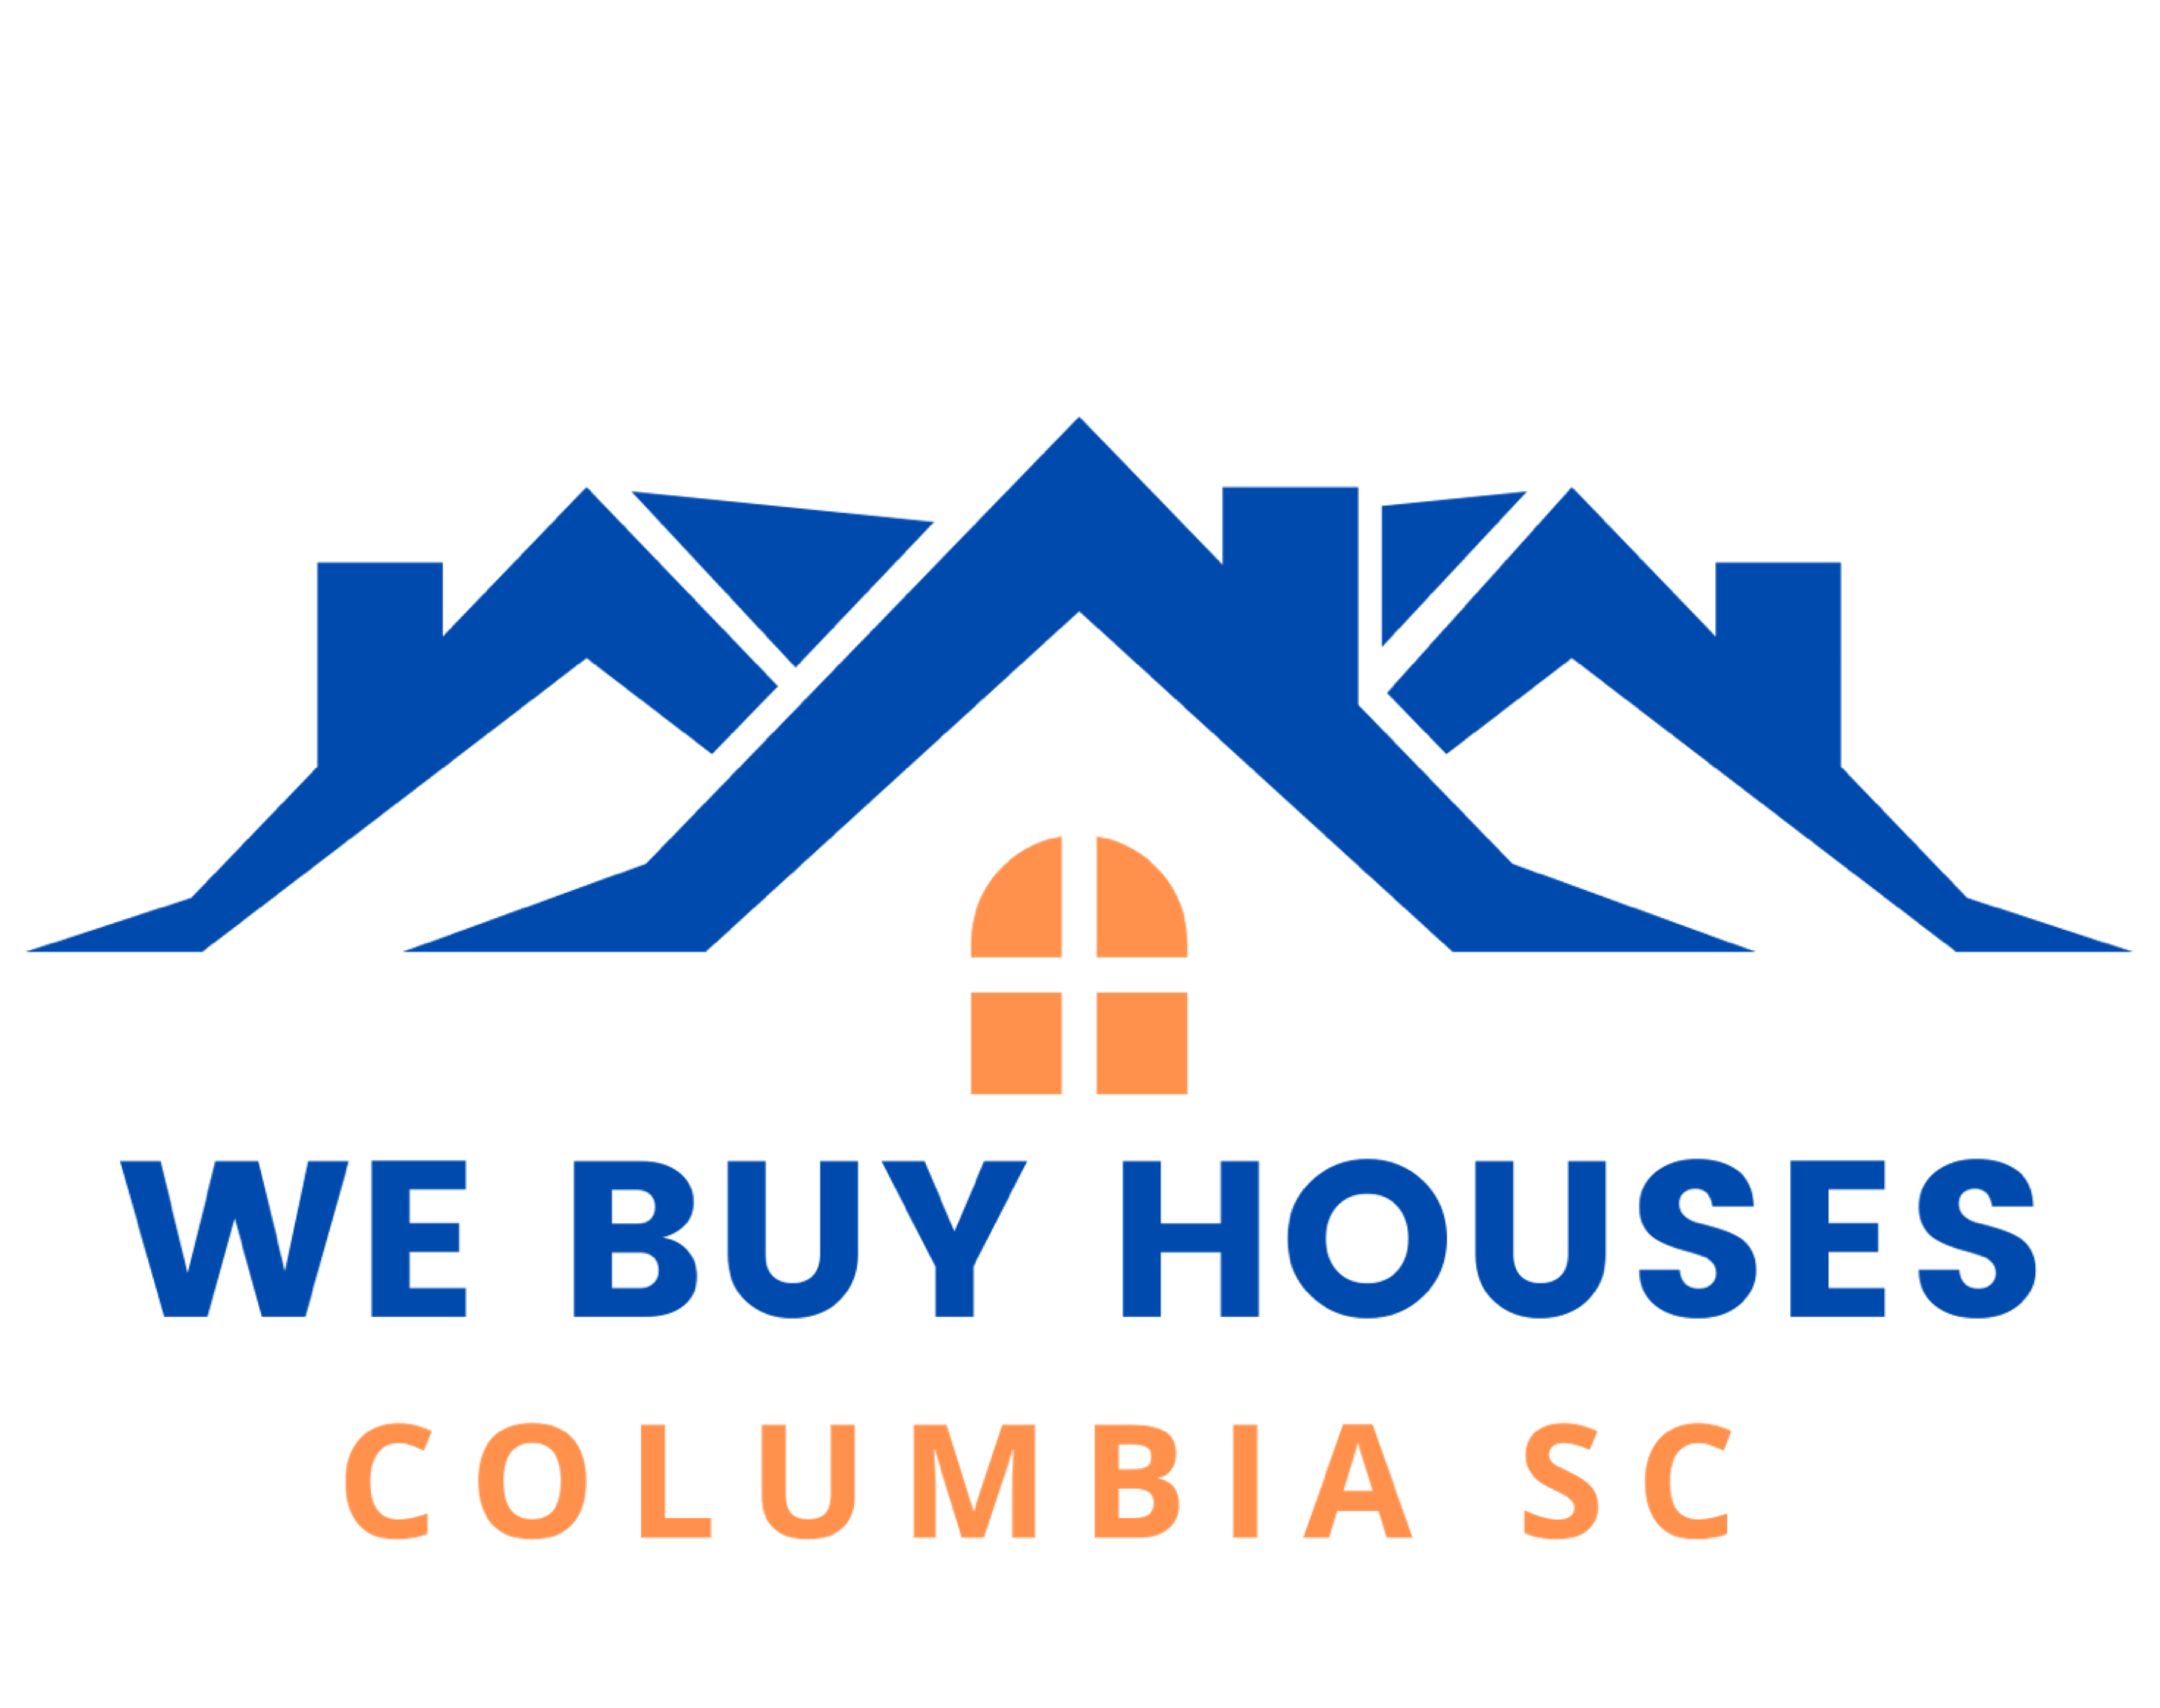 We Buy Houses Columbia SC logo